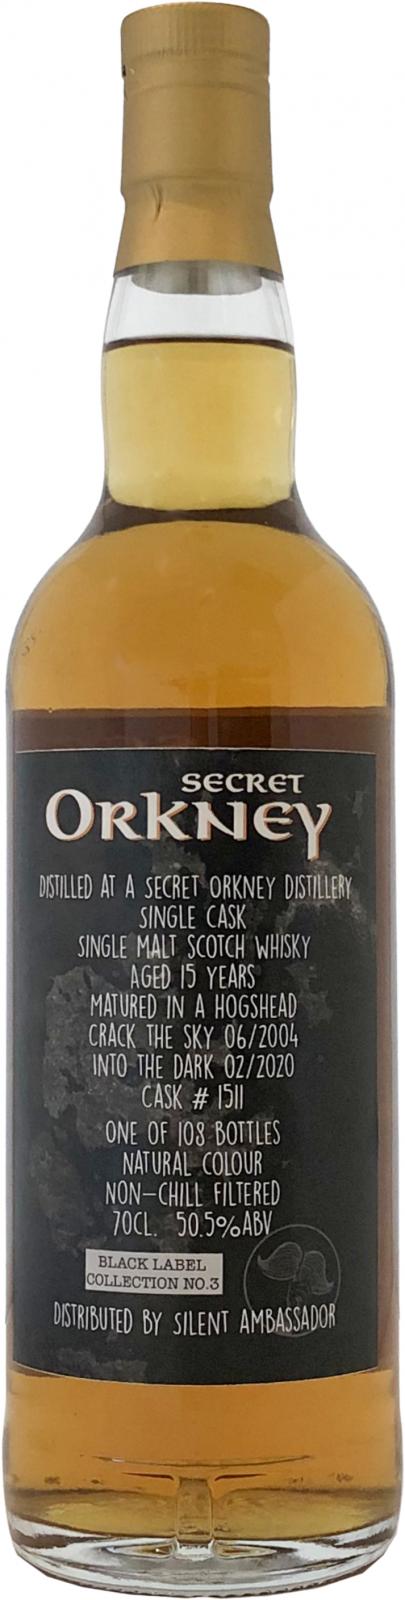 Secret Orkney Distillery 2004 SltA